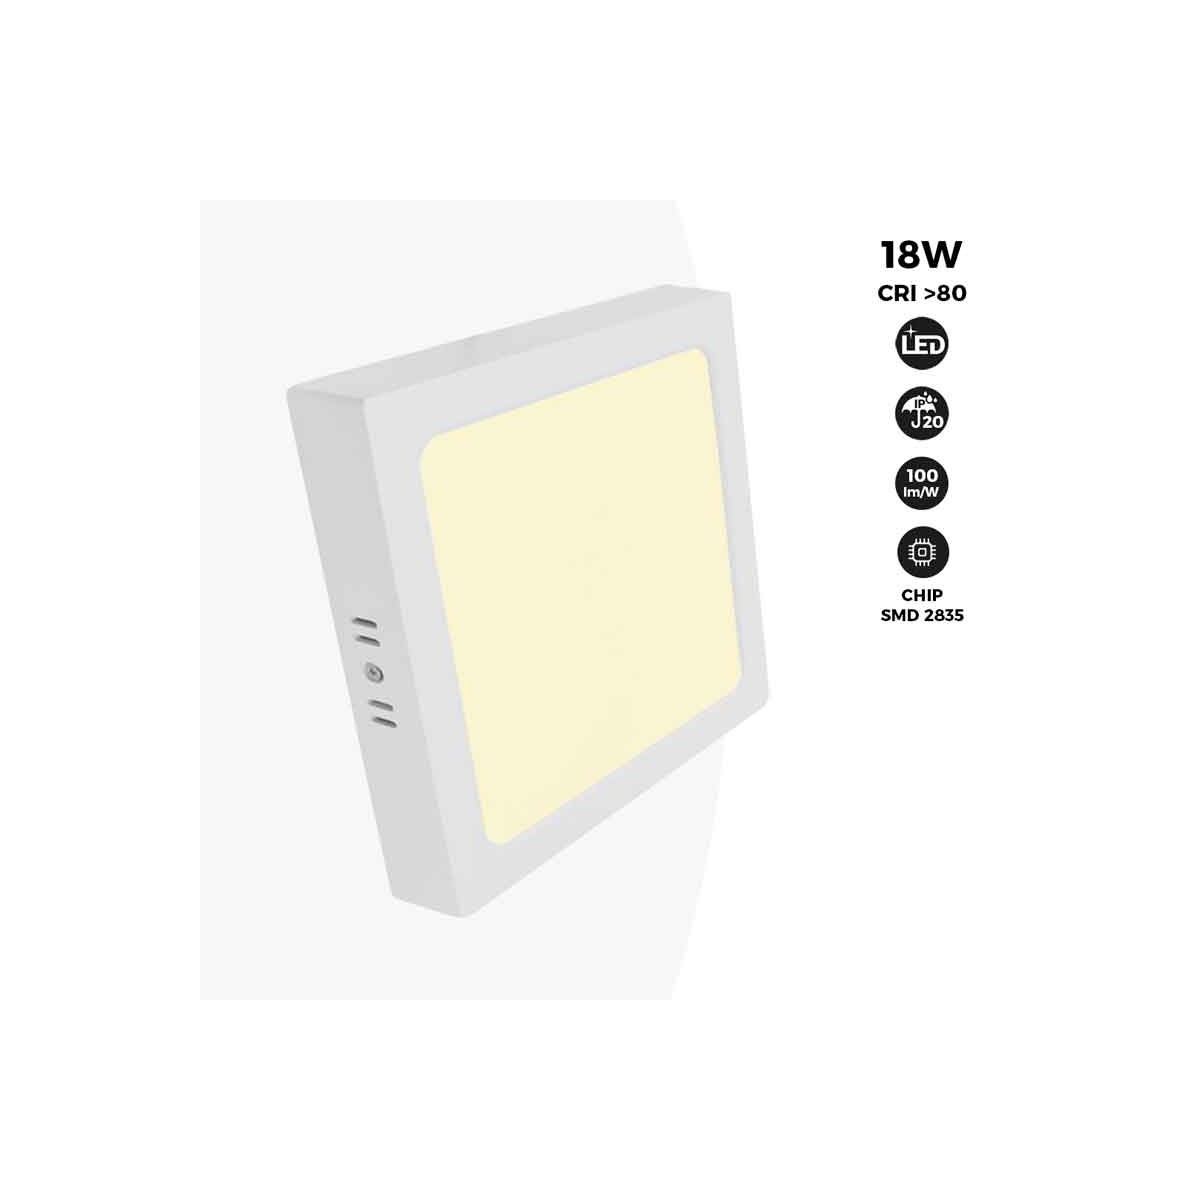 Plafoniera LED quadrata 18W ad alta efficienza